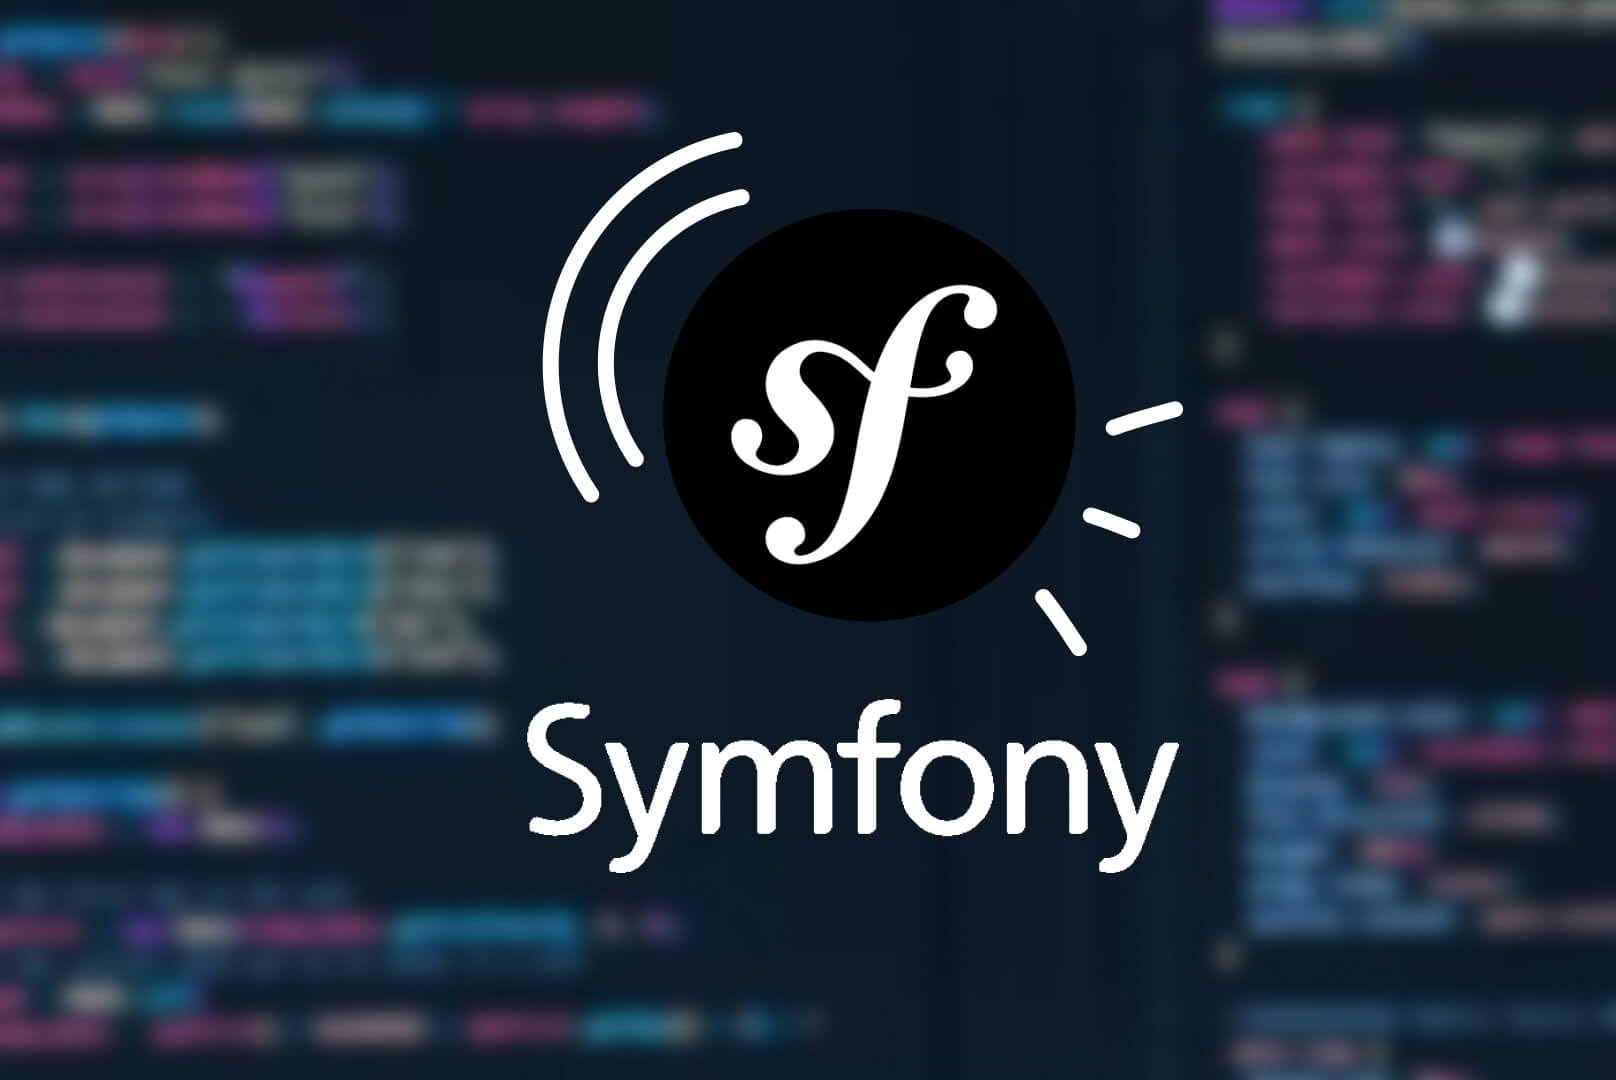 Logo de Symfony devant des lignes de code